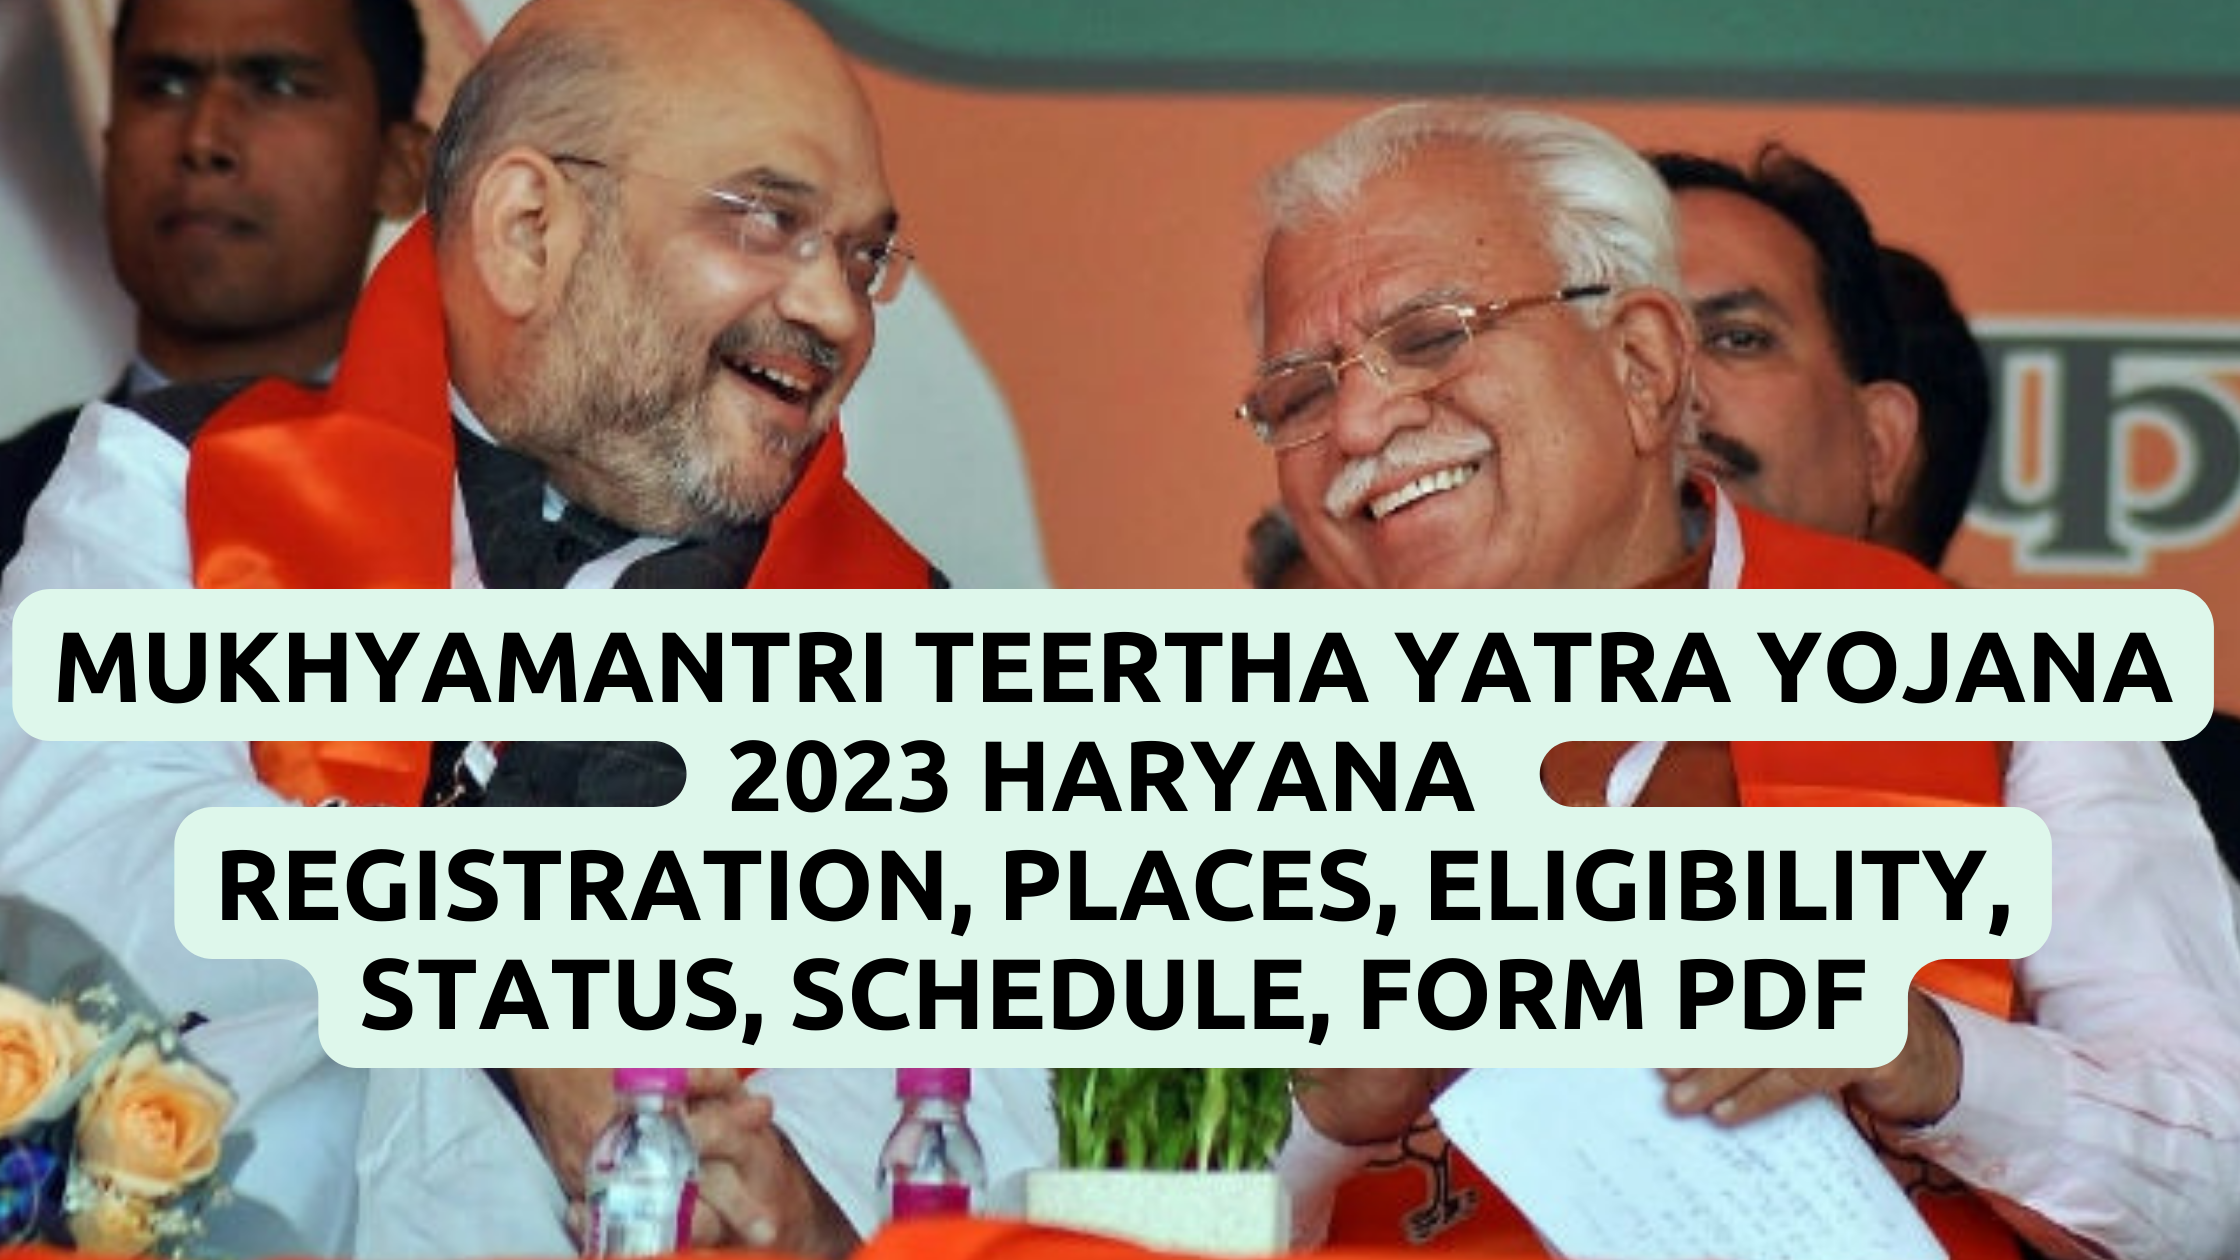 MukhyaMantri Teertha Yatra Yojana 2023 Haryana Registration, Places, Eligibility, Status, Schedule, Form PDF